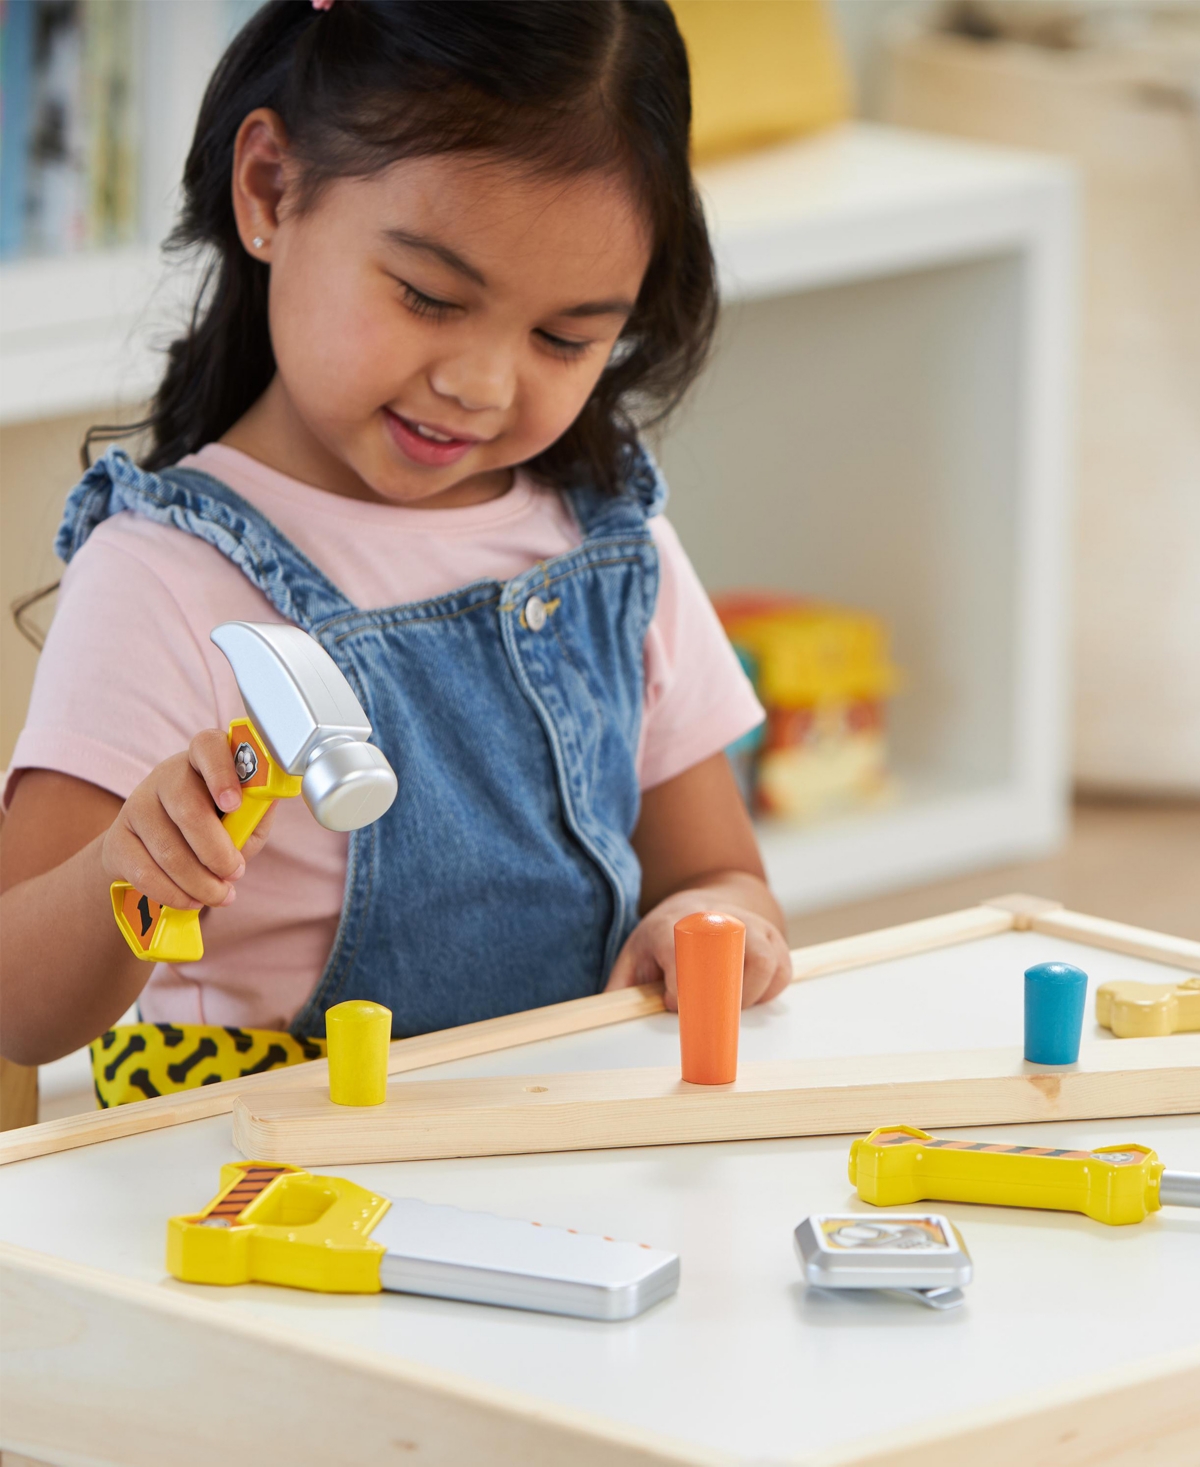 Shop Rubble & Crew , Rubble's Construction Tool Belt, With 6 Piece Kids Tool Set In Multi-color